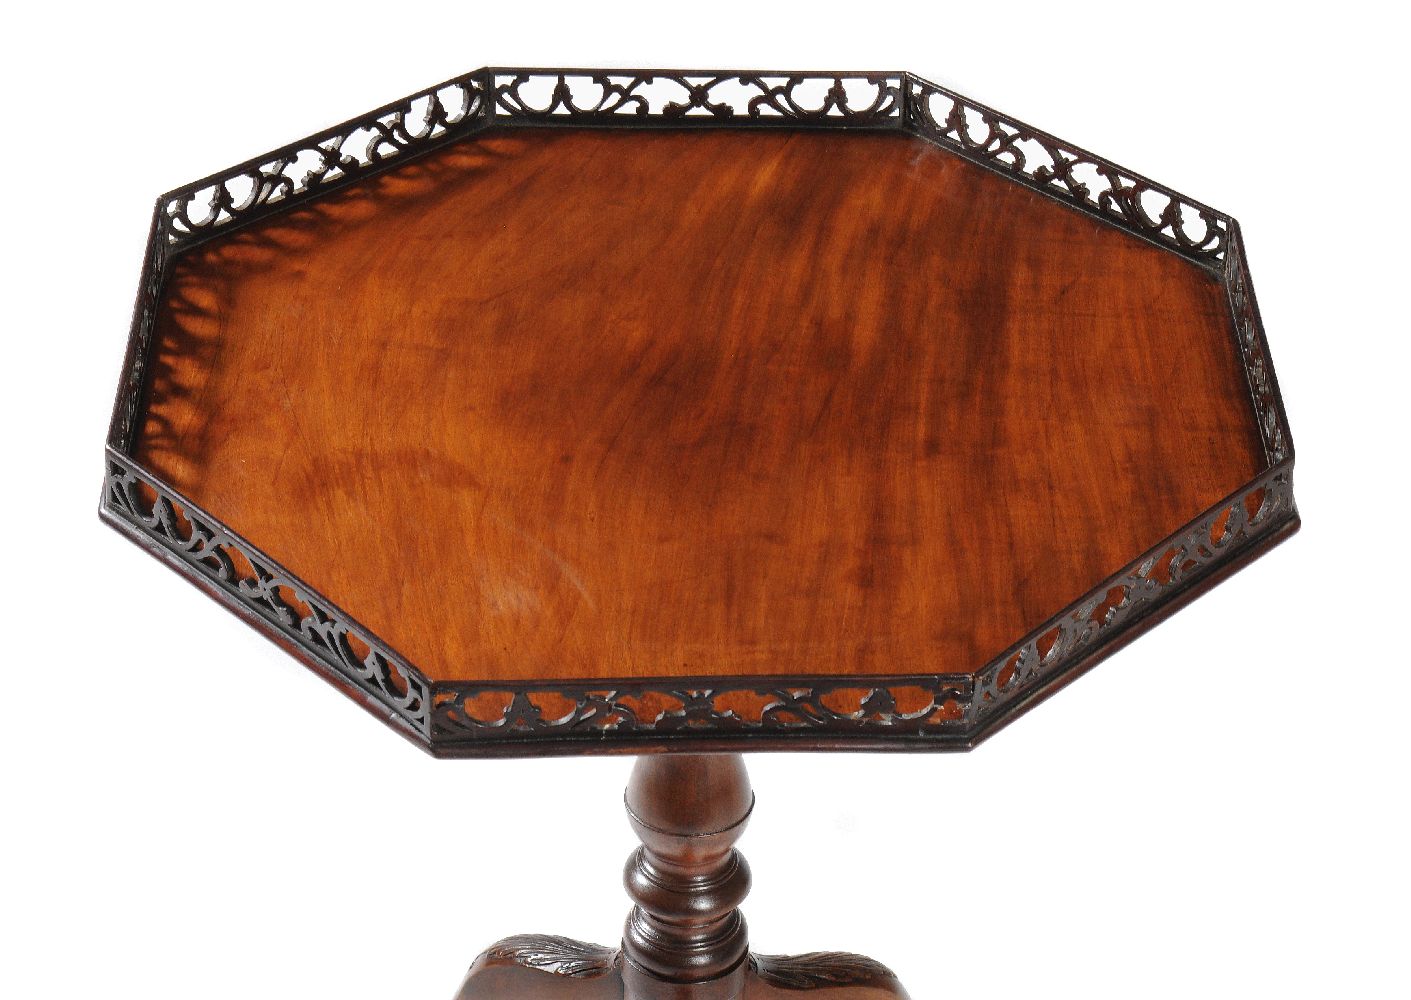 A George III mahogany birdcage tripod table - Image 2 of 3